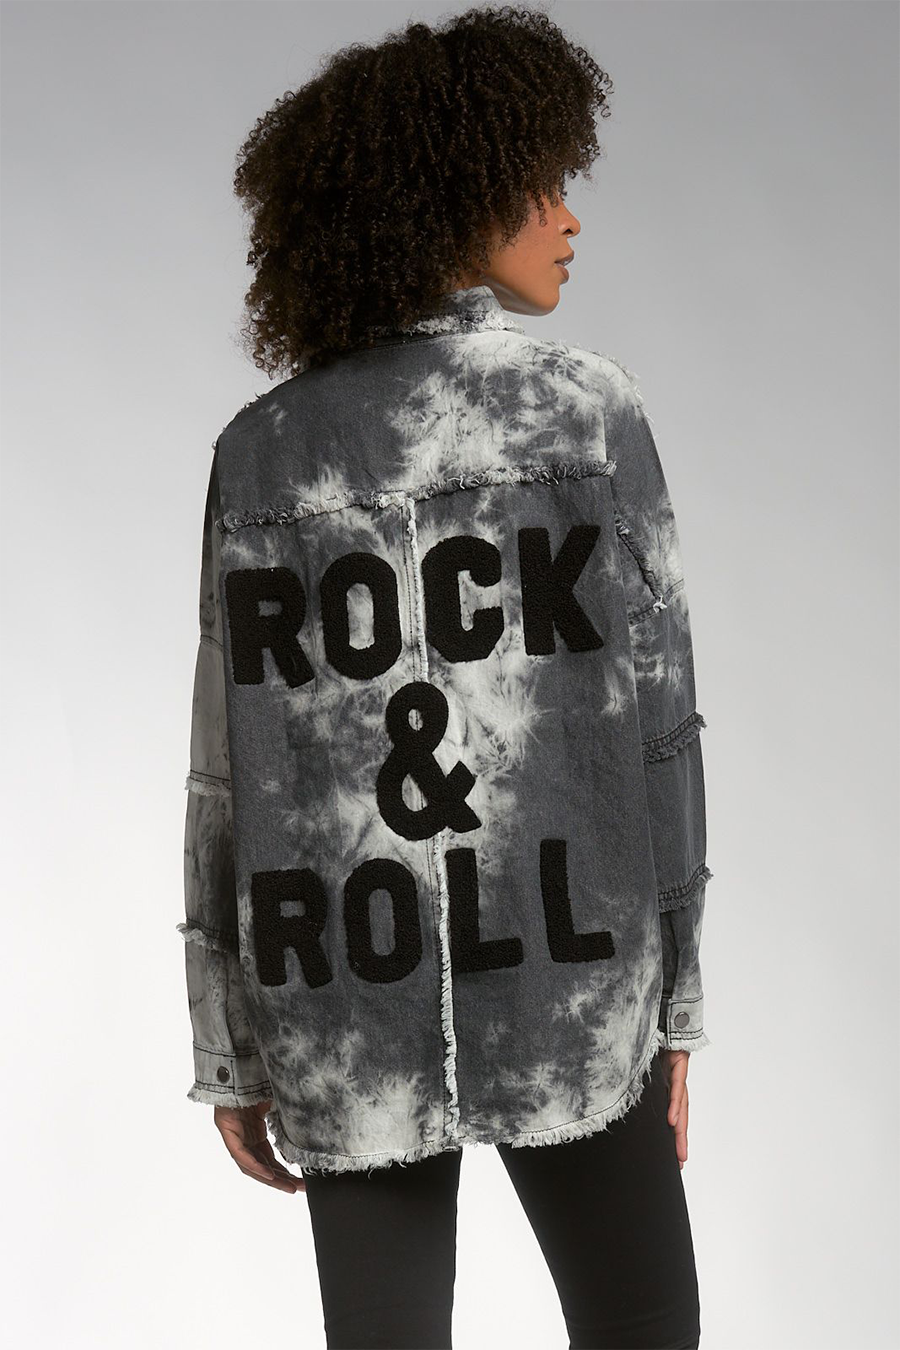 Distressed Rock & Roll Jacket | Black Tie Dye - Main Image Number 1 of 3